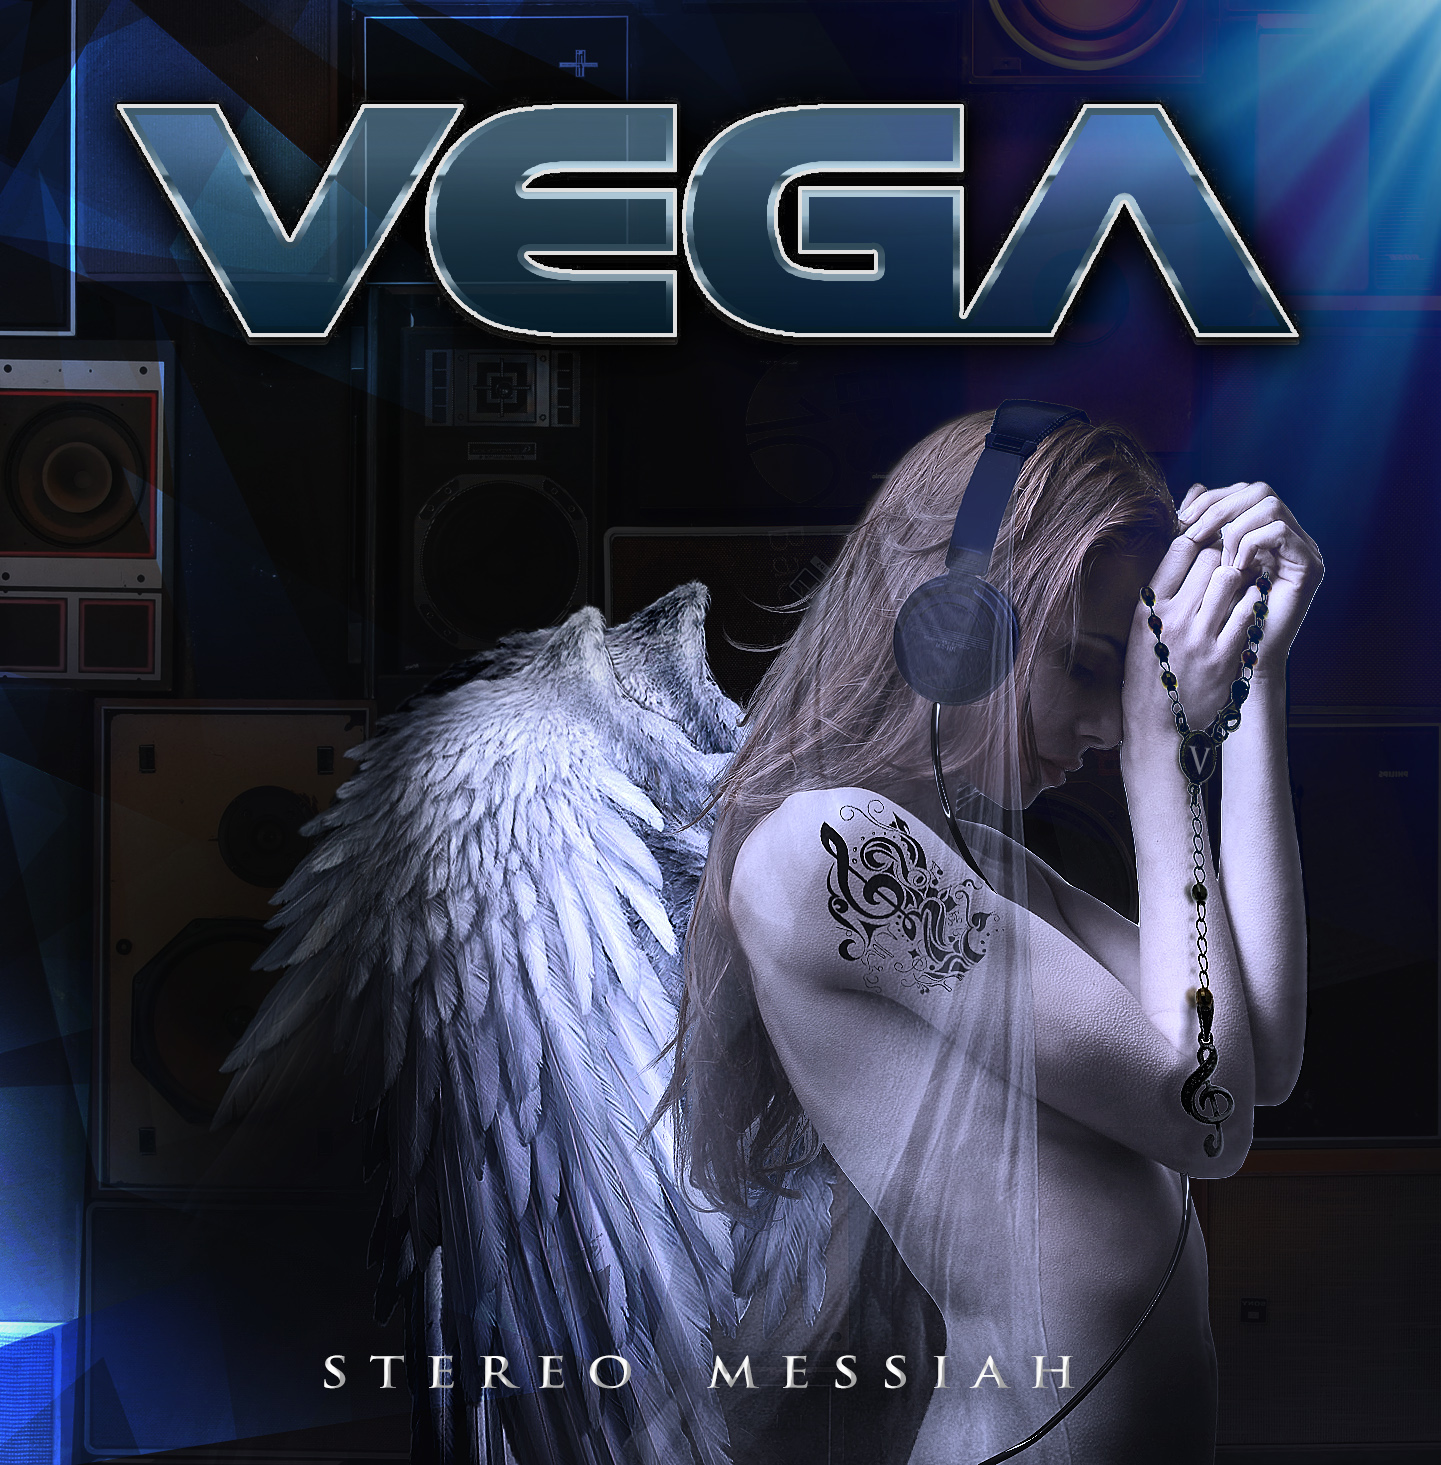 Flac 2014. Vega stereo Messiah 2014. Мессии 2014. Vega — Anarchy and Unity. Vega (uk) 2014 - stereo Messiah.